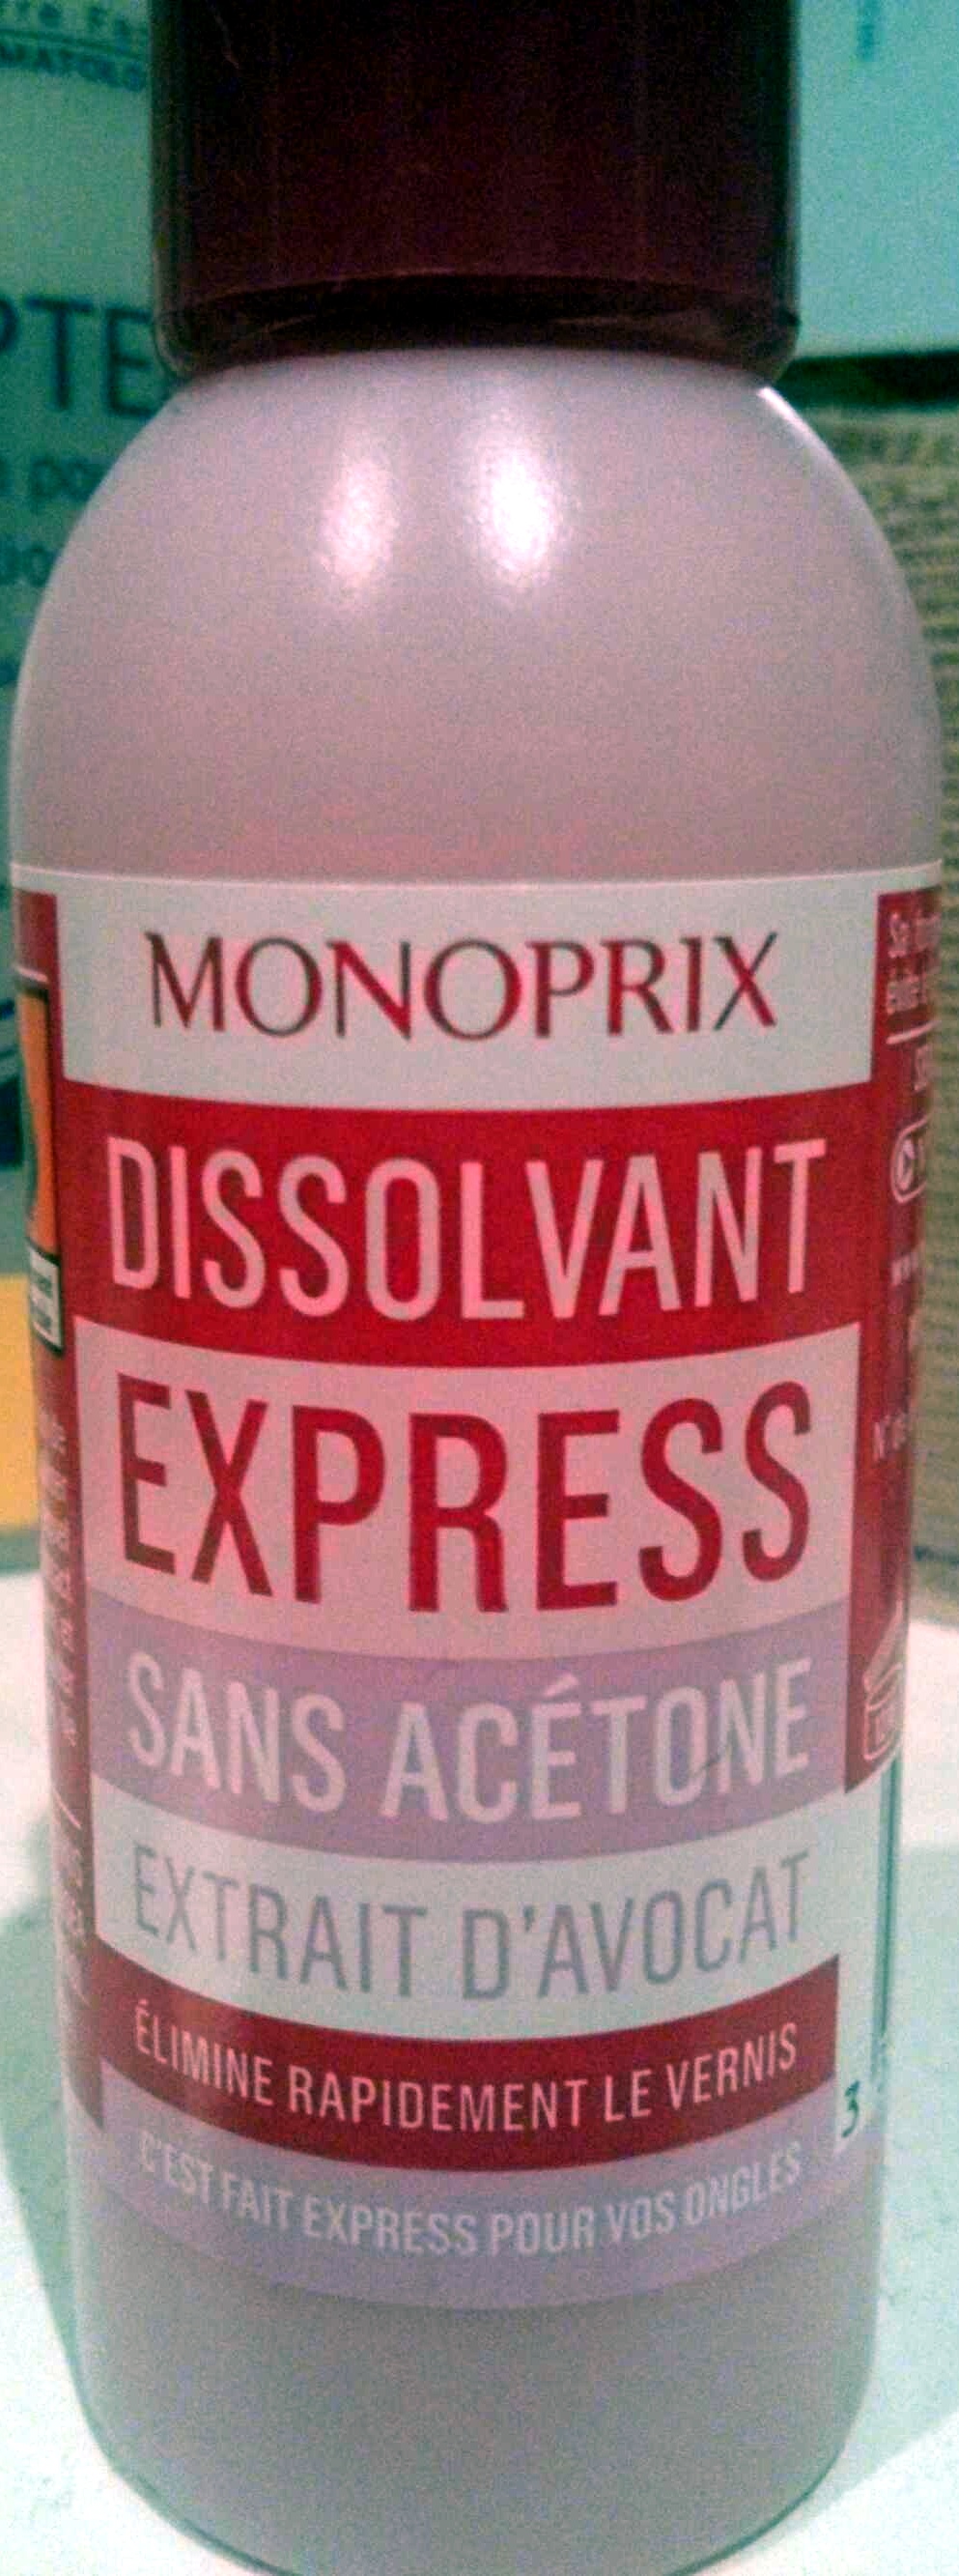 Dissolvant express sans acétone extrait d'avocat - Produkto - fr